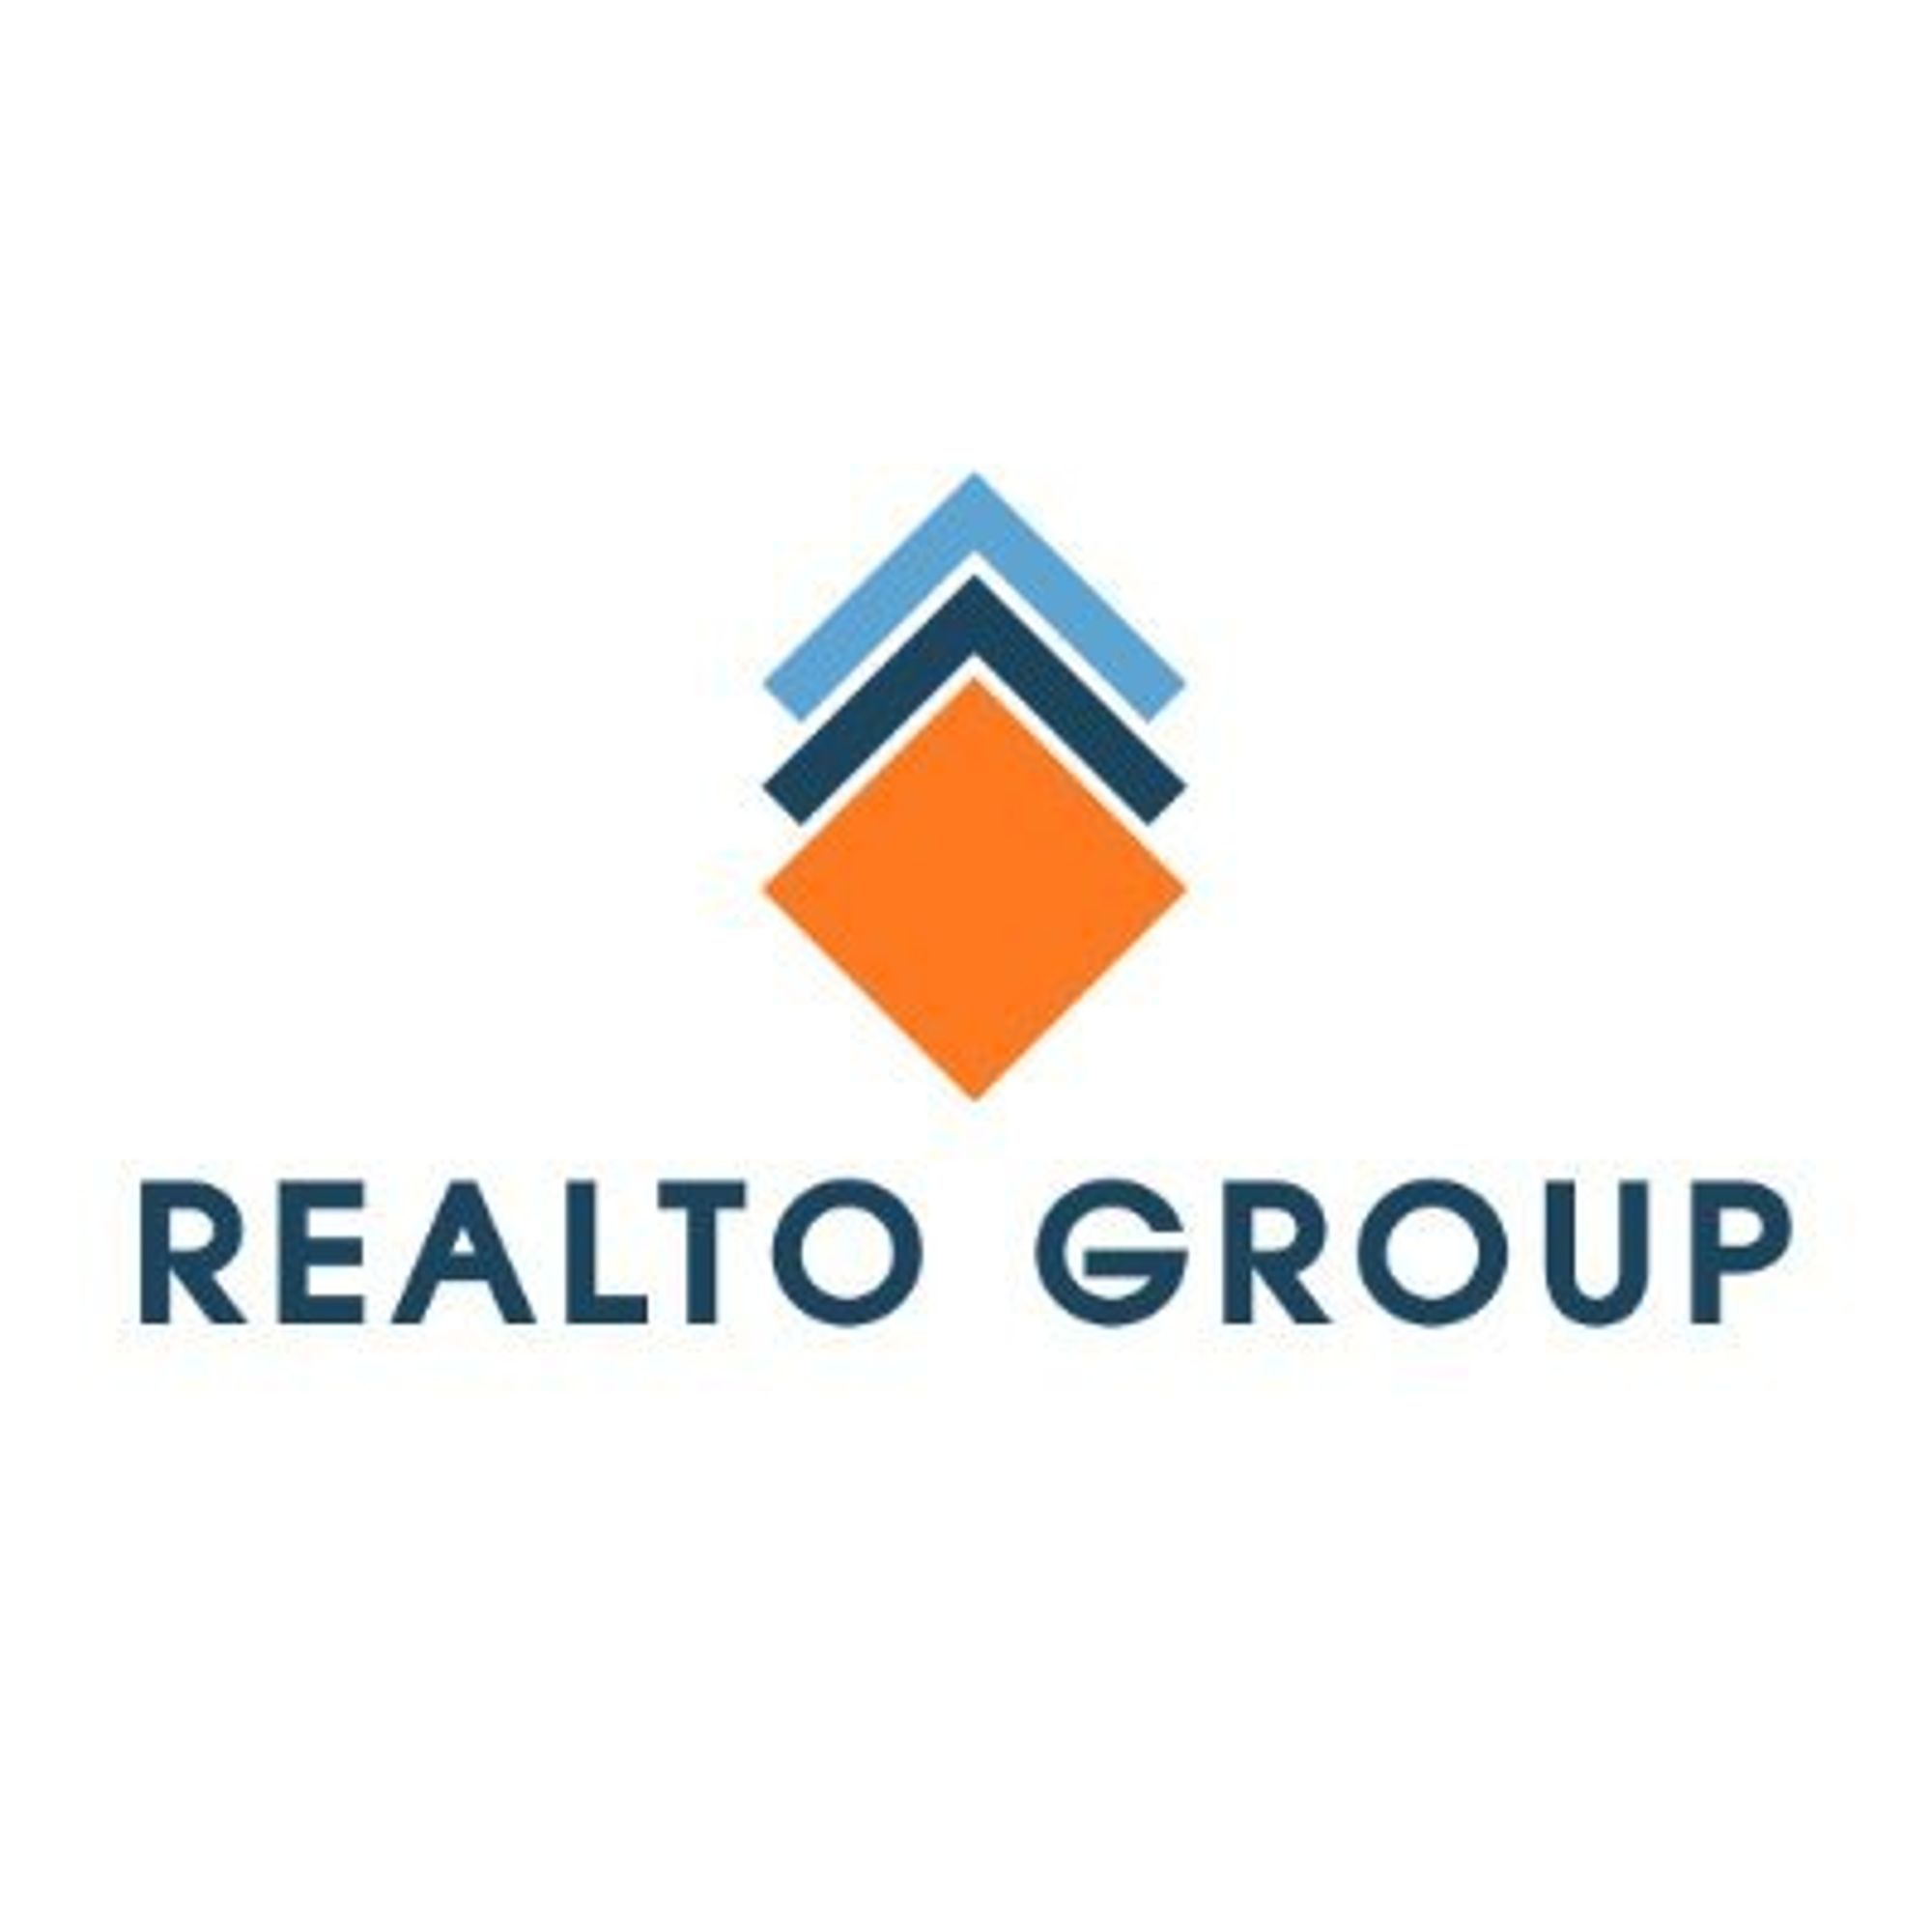 Realto Group